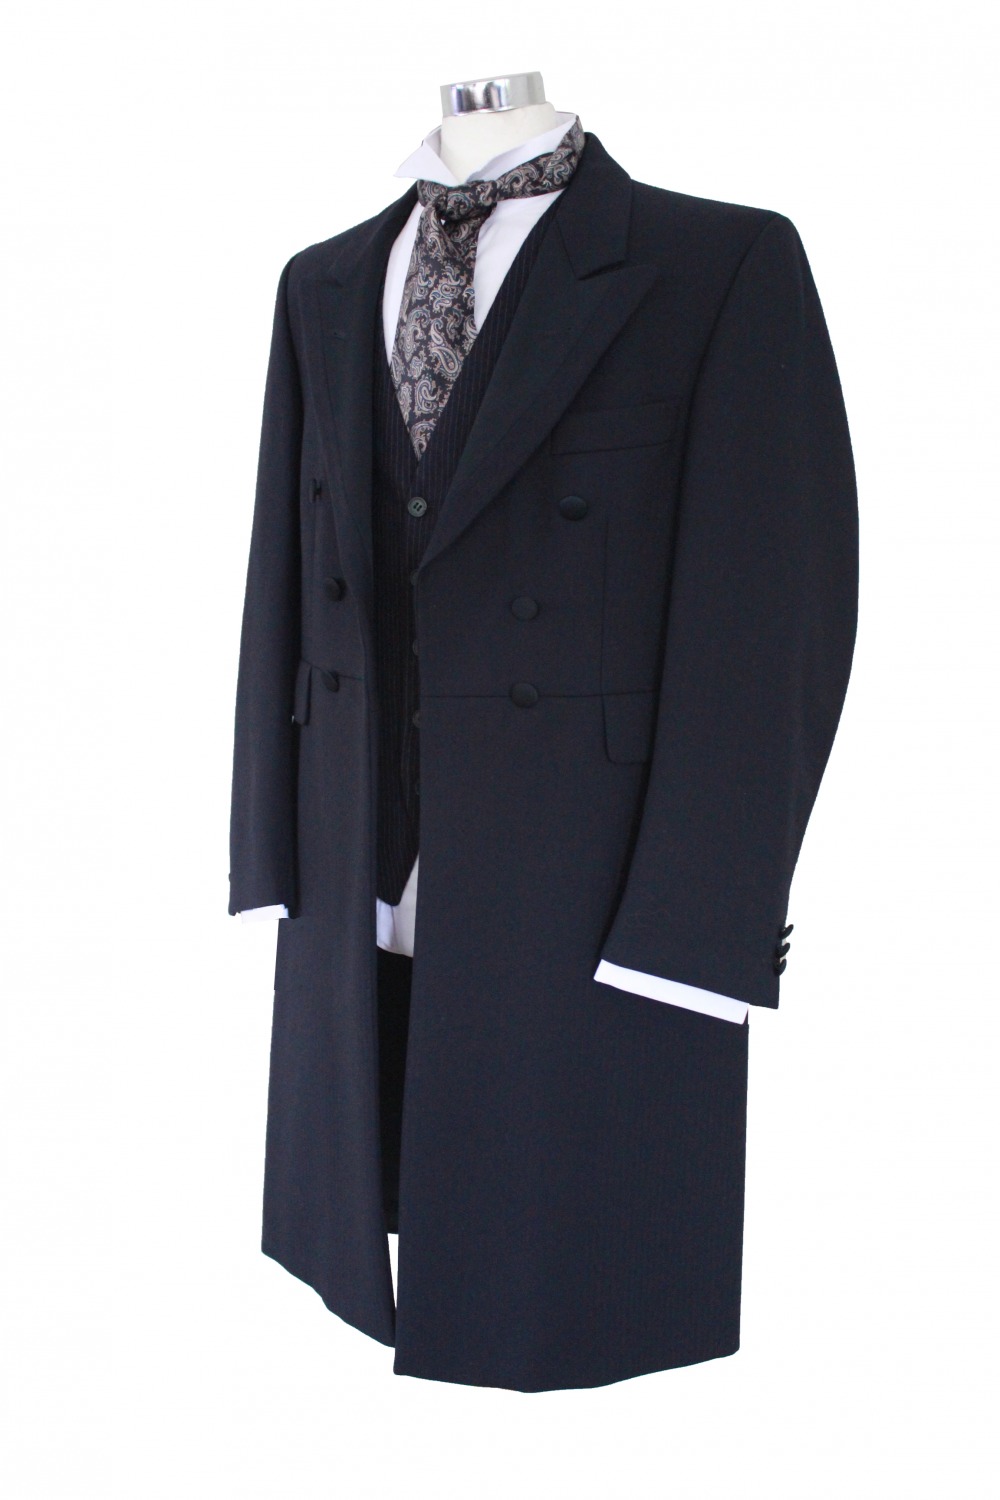 Double-breasted frock coat ; Full dress coat ; Tuxedo ; Cutaway walking coat  - NYPL Digital Collections